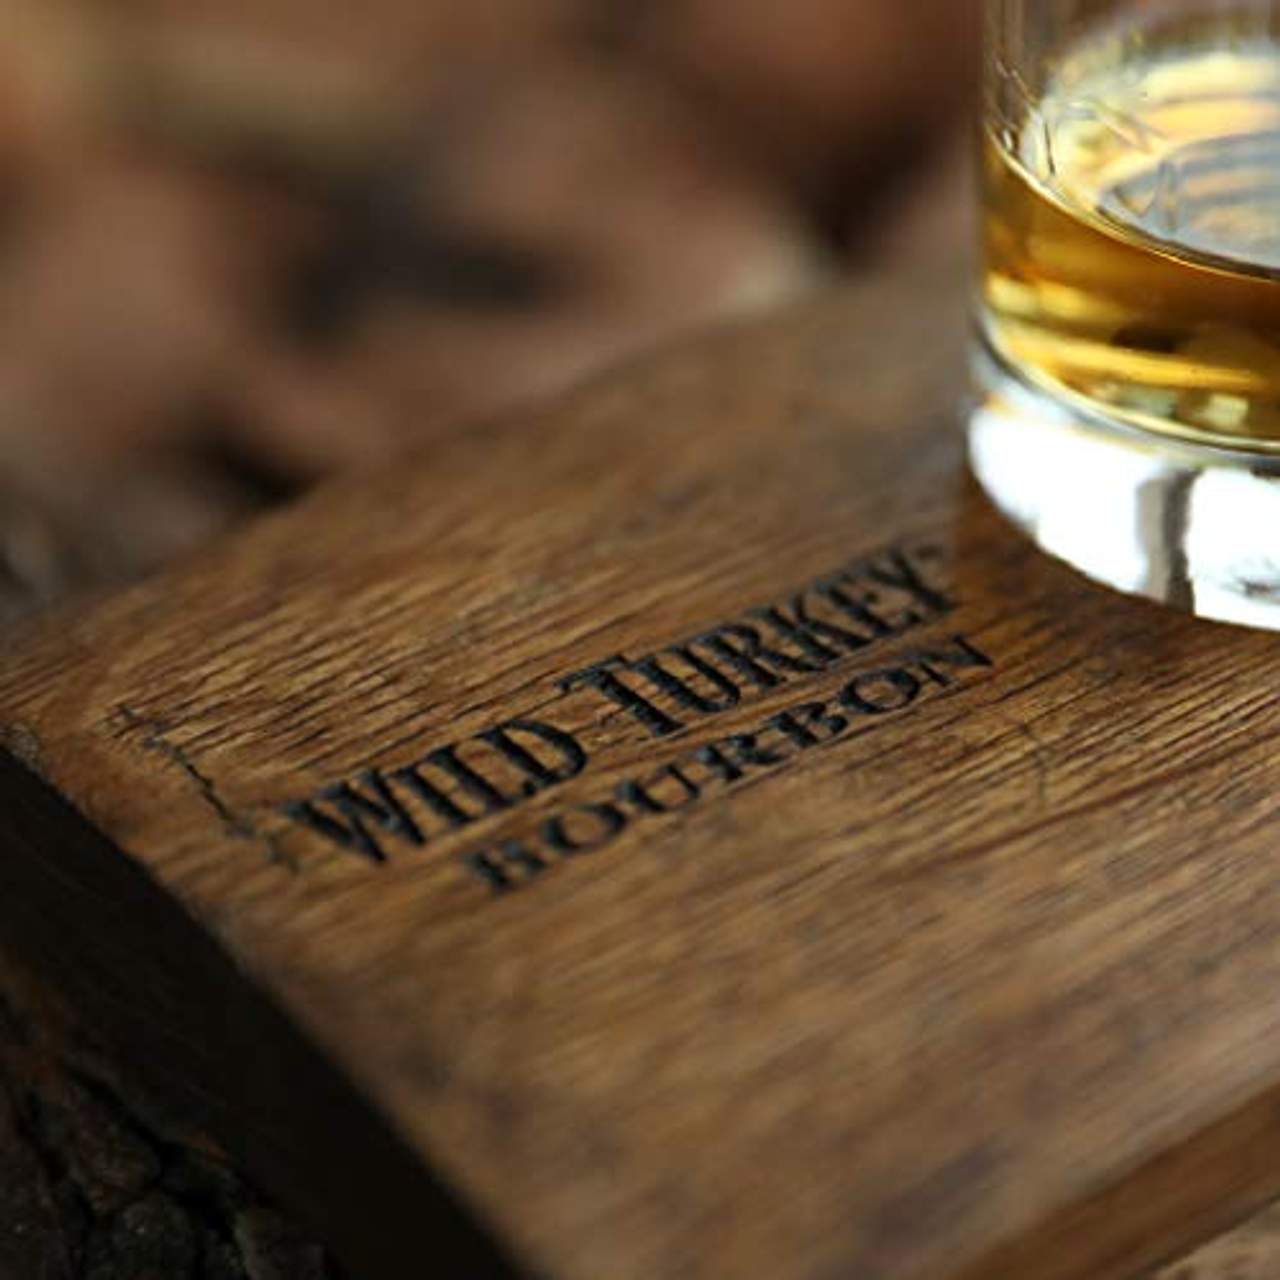 Wild Turkey Rare Breed Barrel Proof Whisky